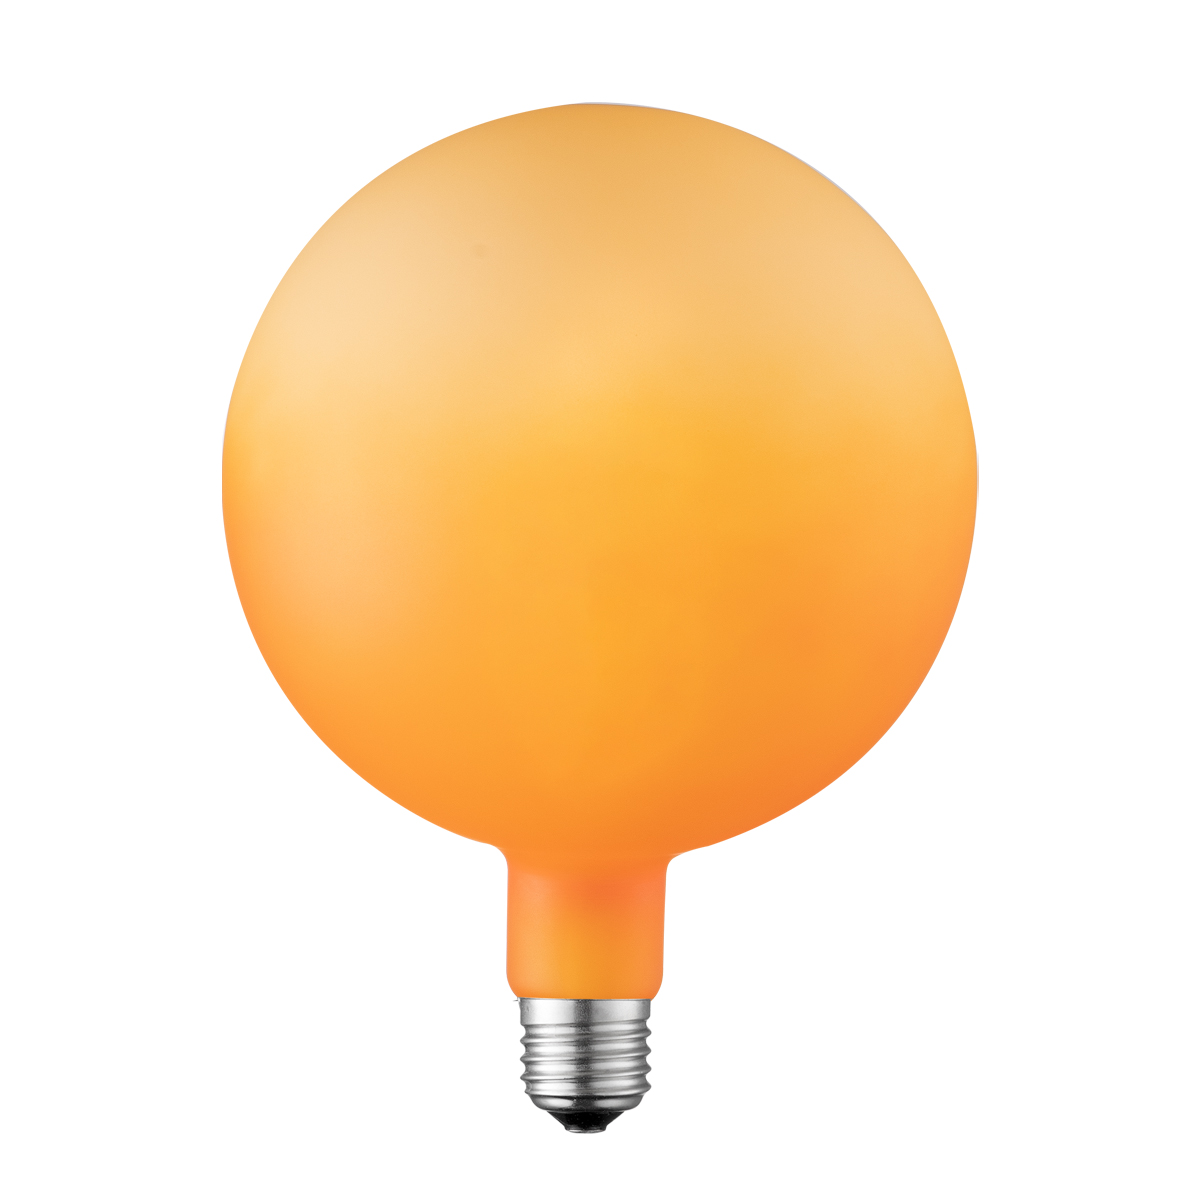 Tangla lighting - TLB-9006-04N - LED Light Bulb Single Spiral filament - G180 4W gradient opal - non dimmable - E27